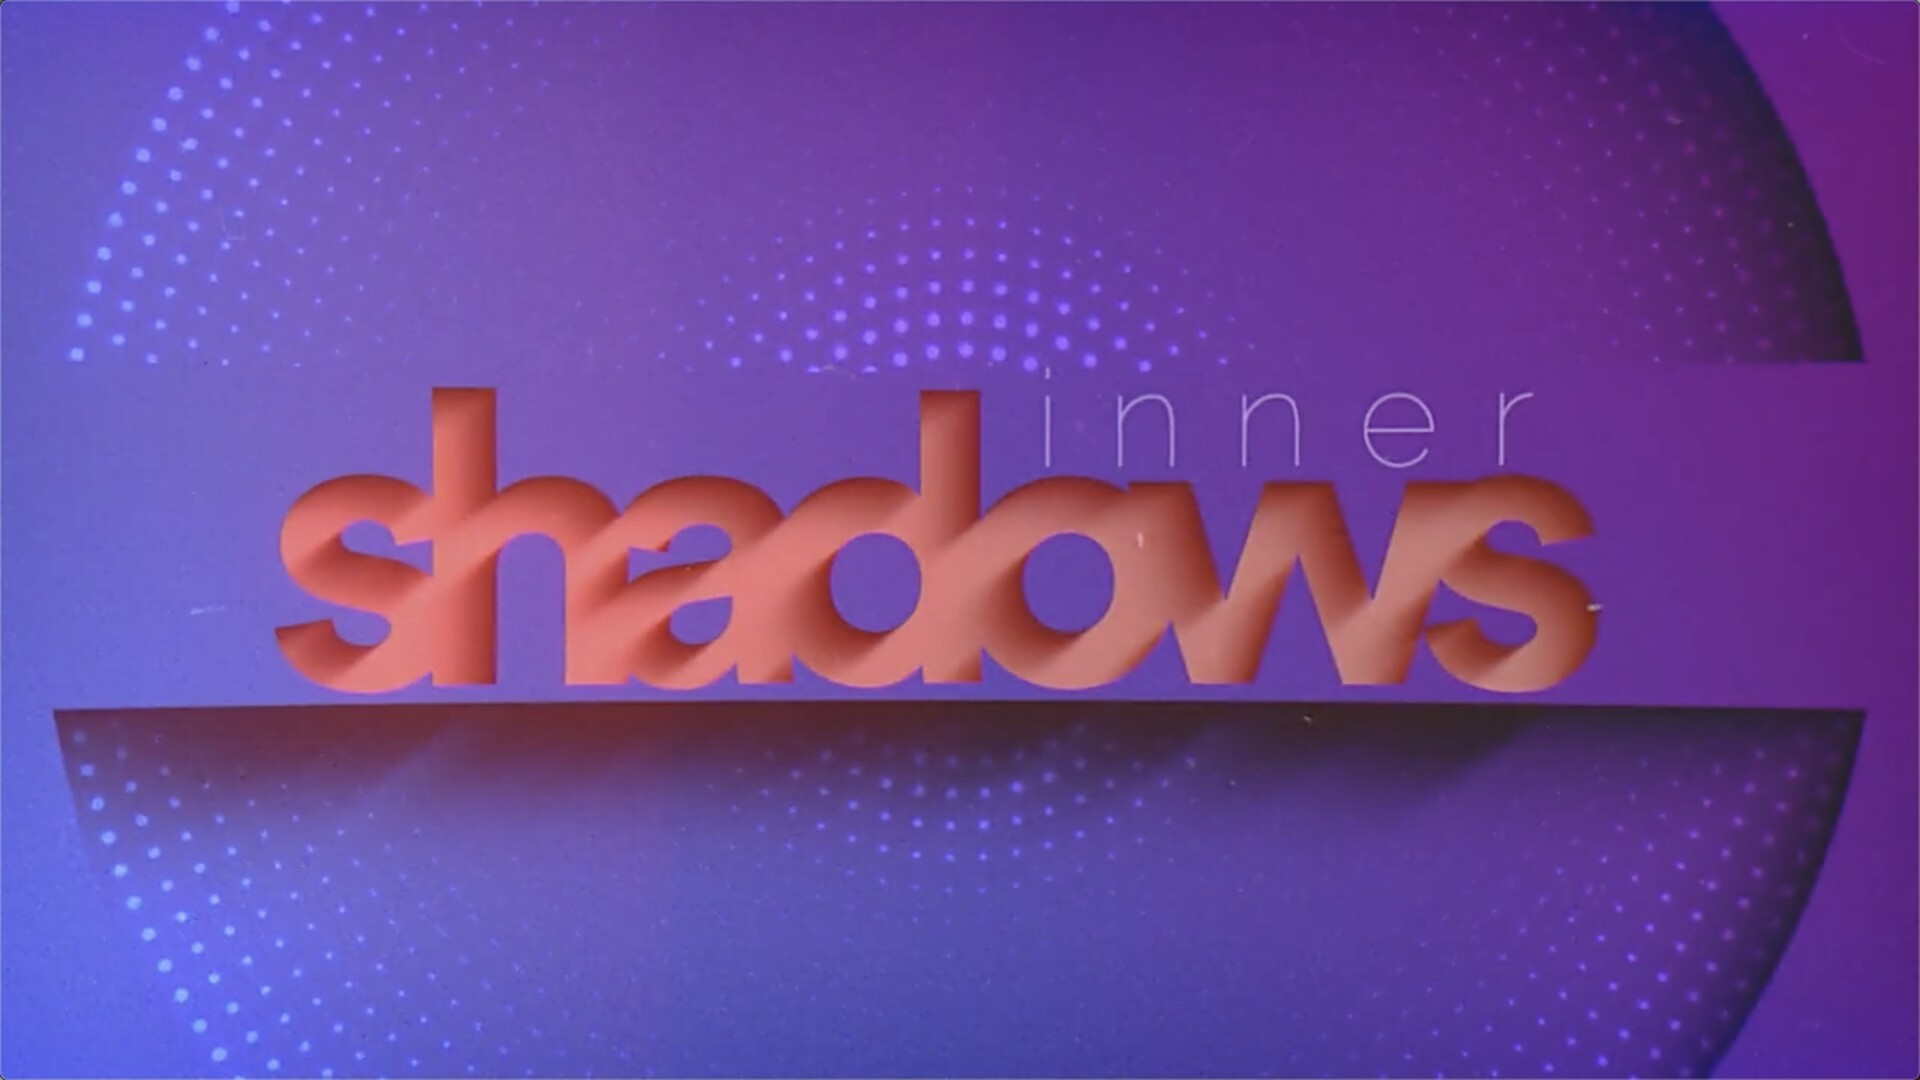 AE插件:Shadow Studio for Mac(优雅漂亮真实阴影特效插件) 